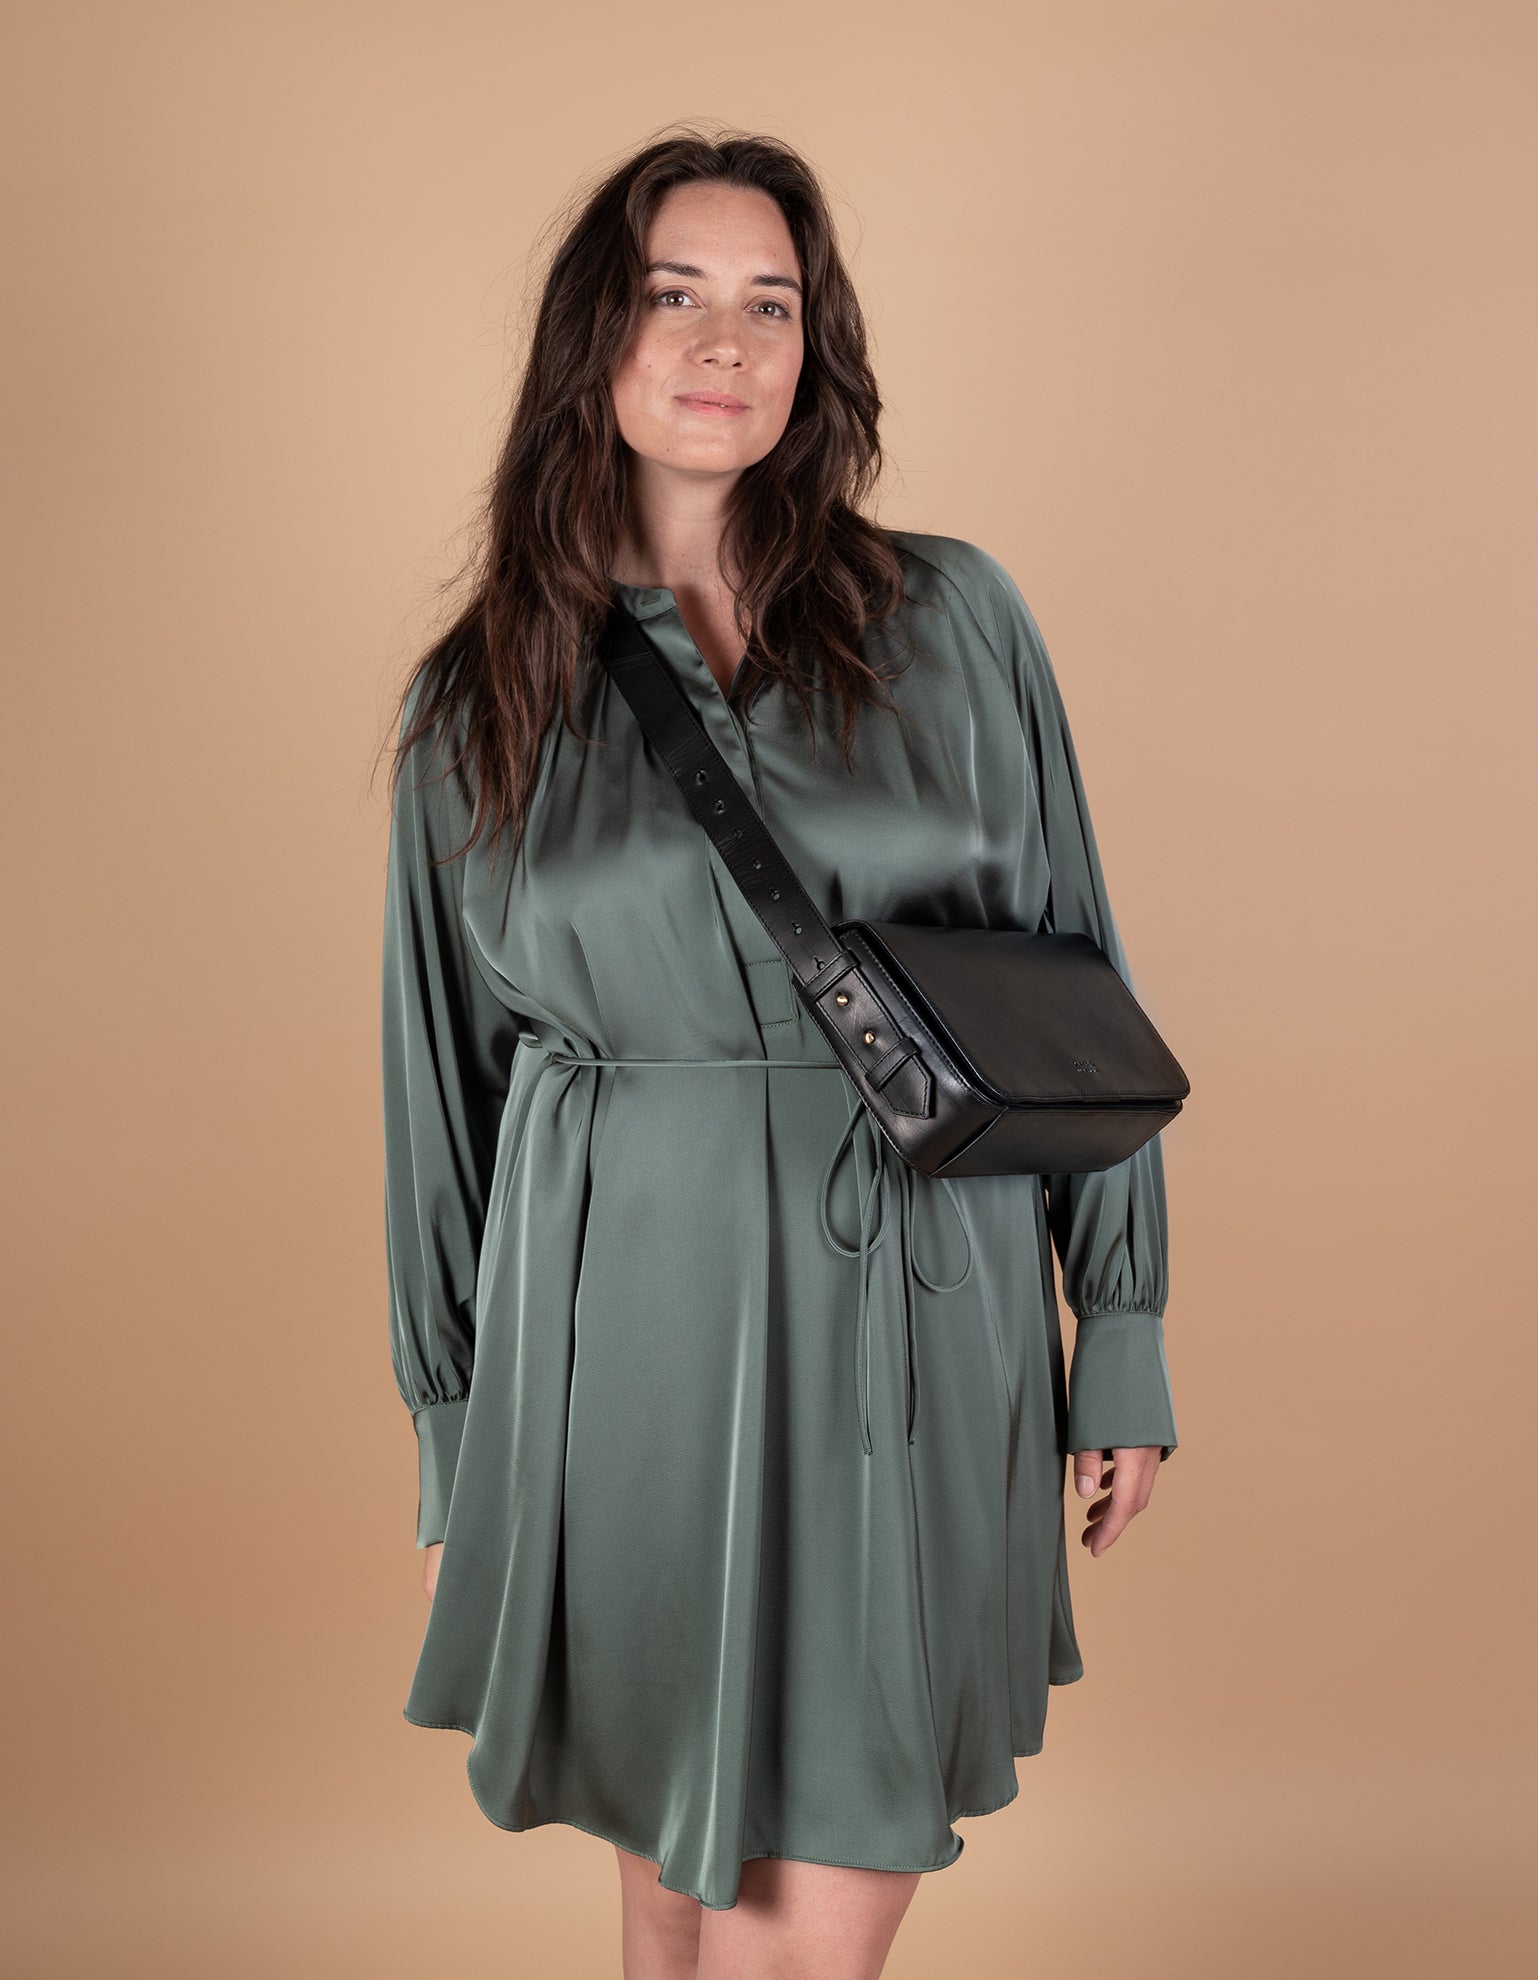 Black Longuette Leather womens handbag. Square shape with an adjustable strap. Model image